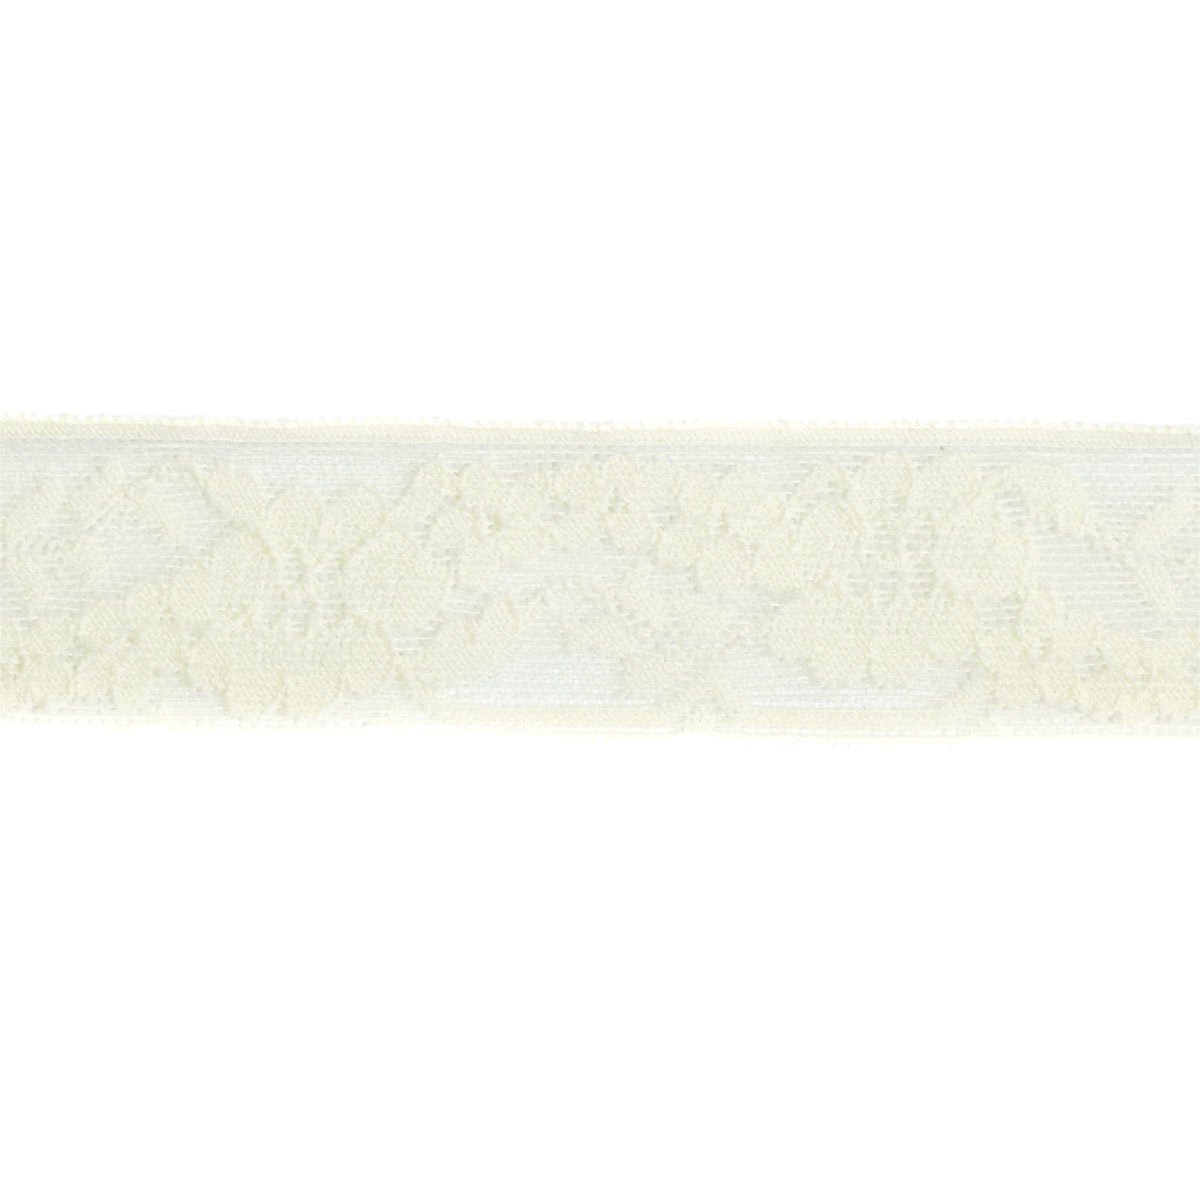 5/8 White Lace Trim